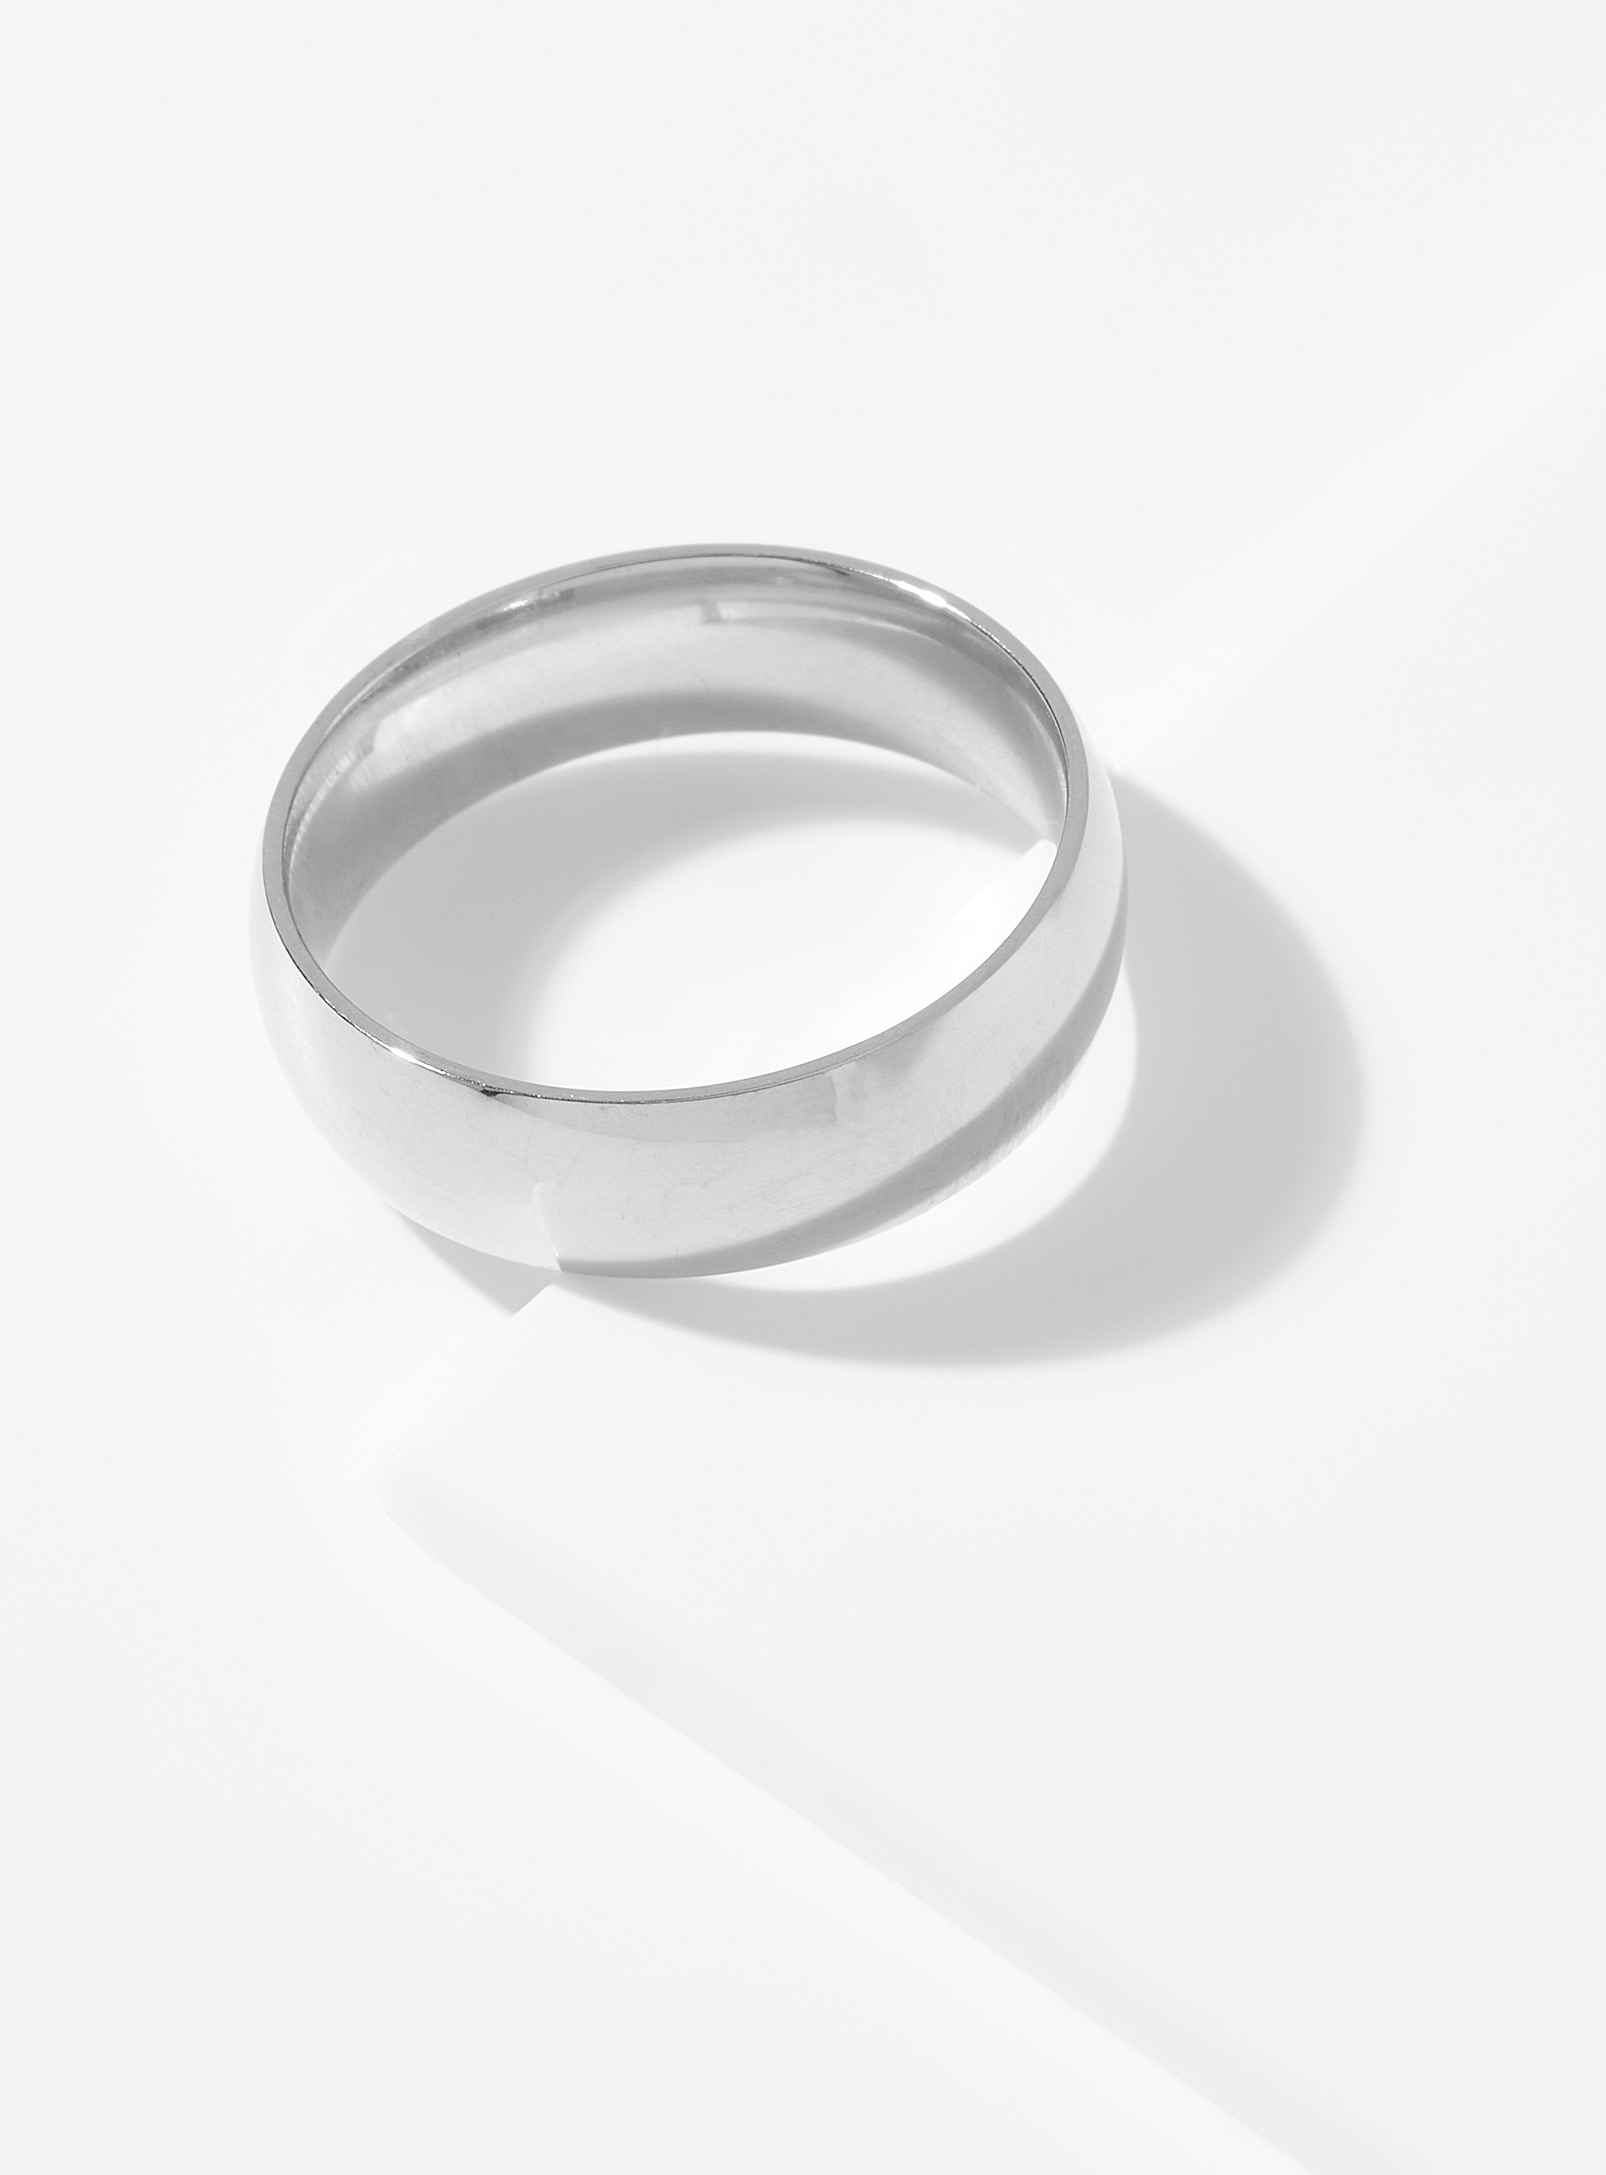 Simons - Women's Simplicity ring